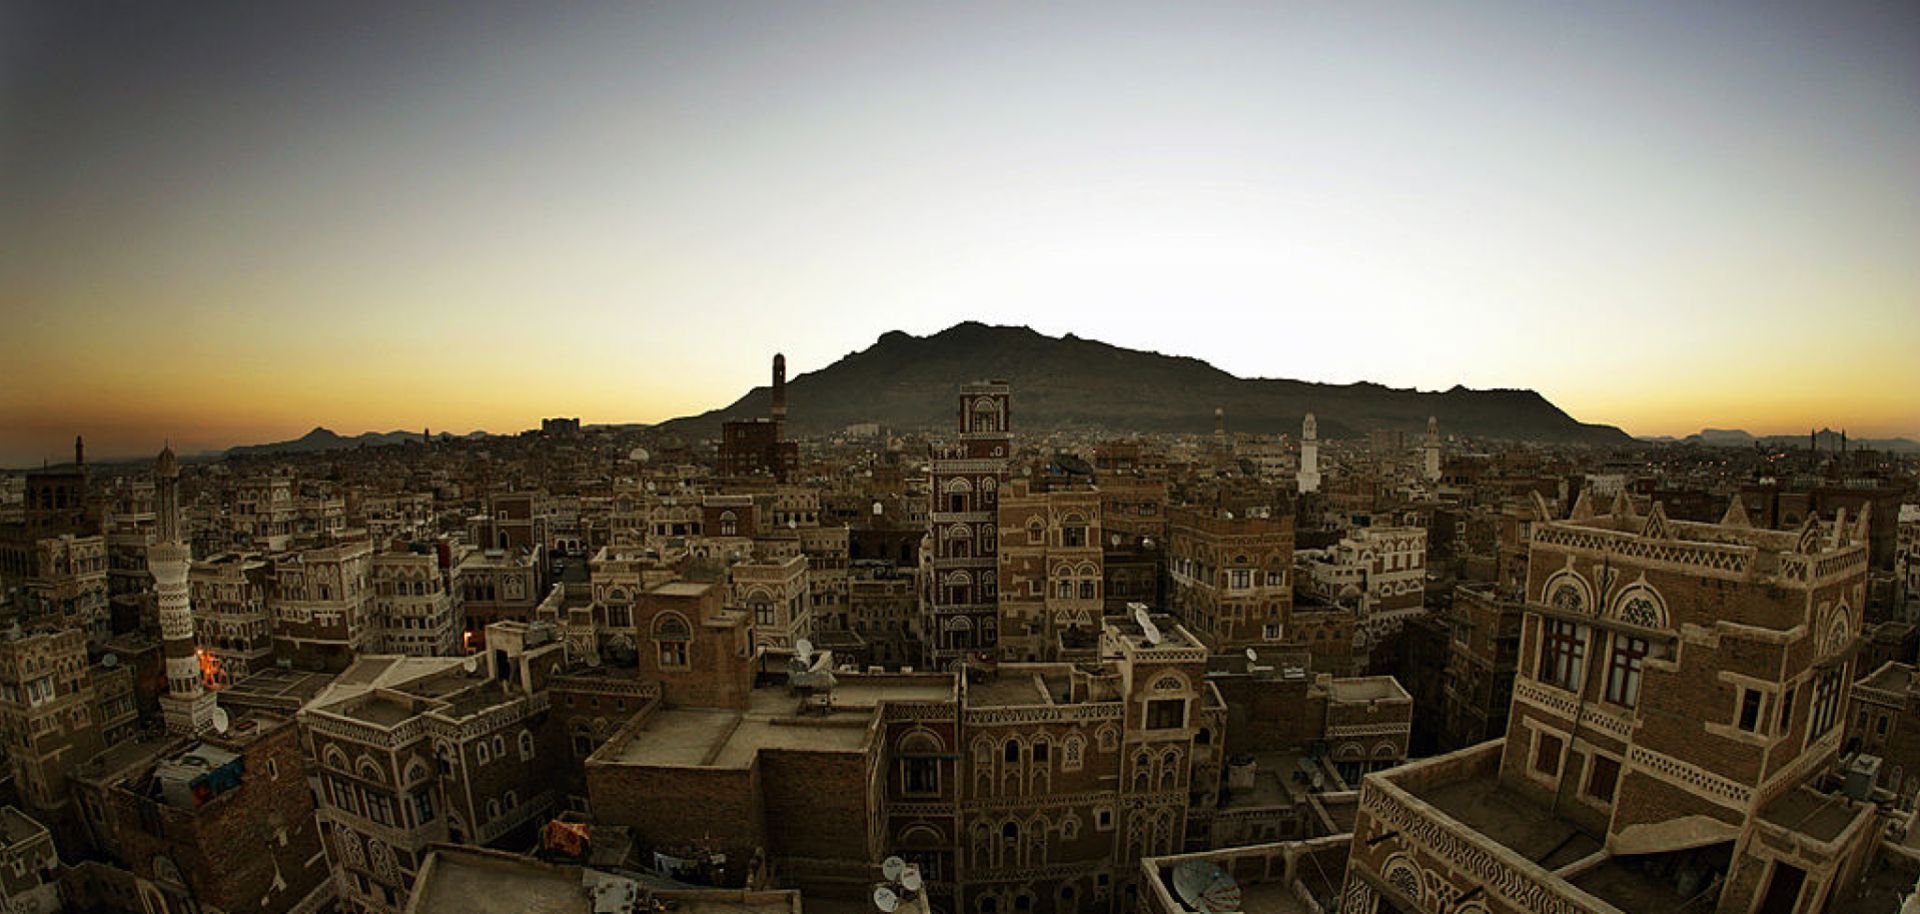 Overlooking Sanaa, Yemen’s capital city.